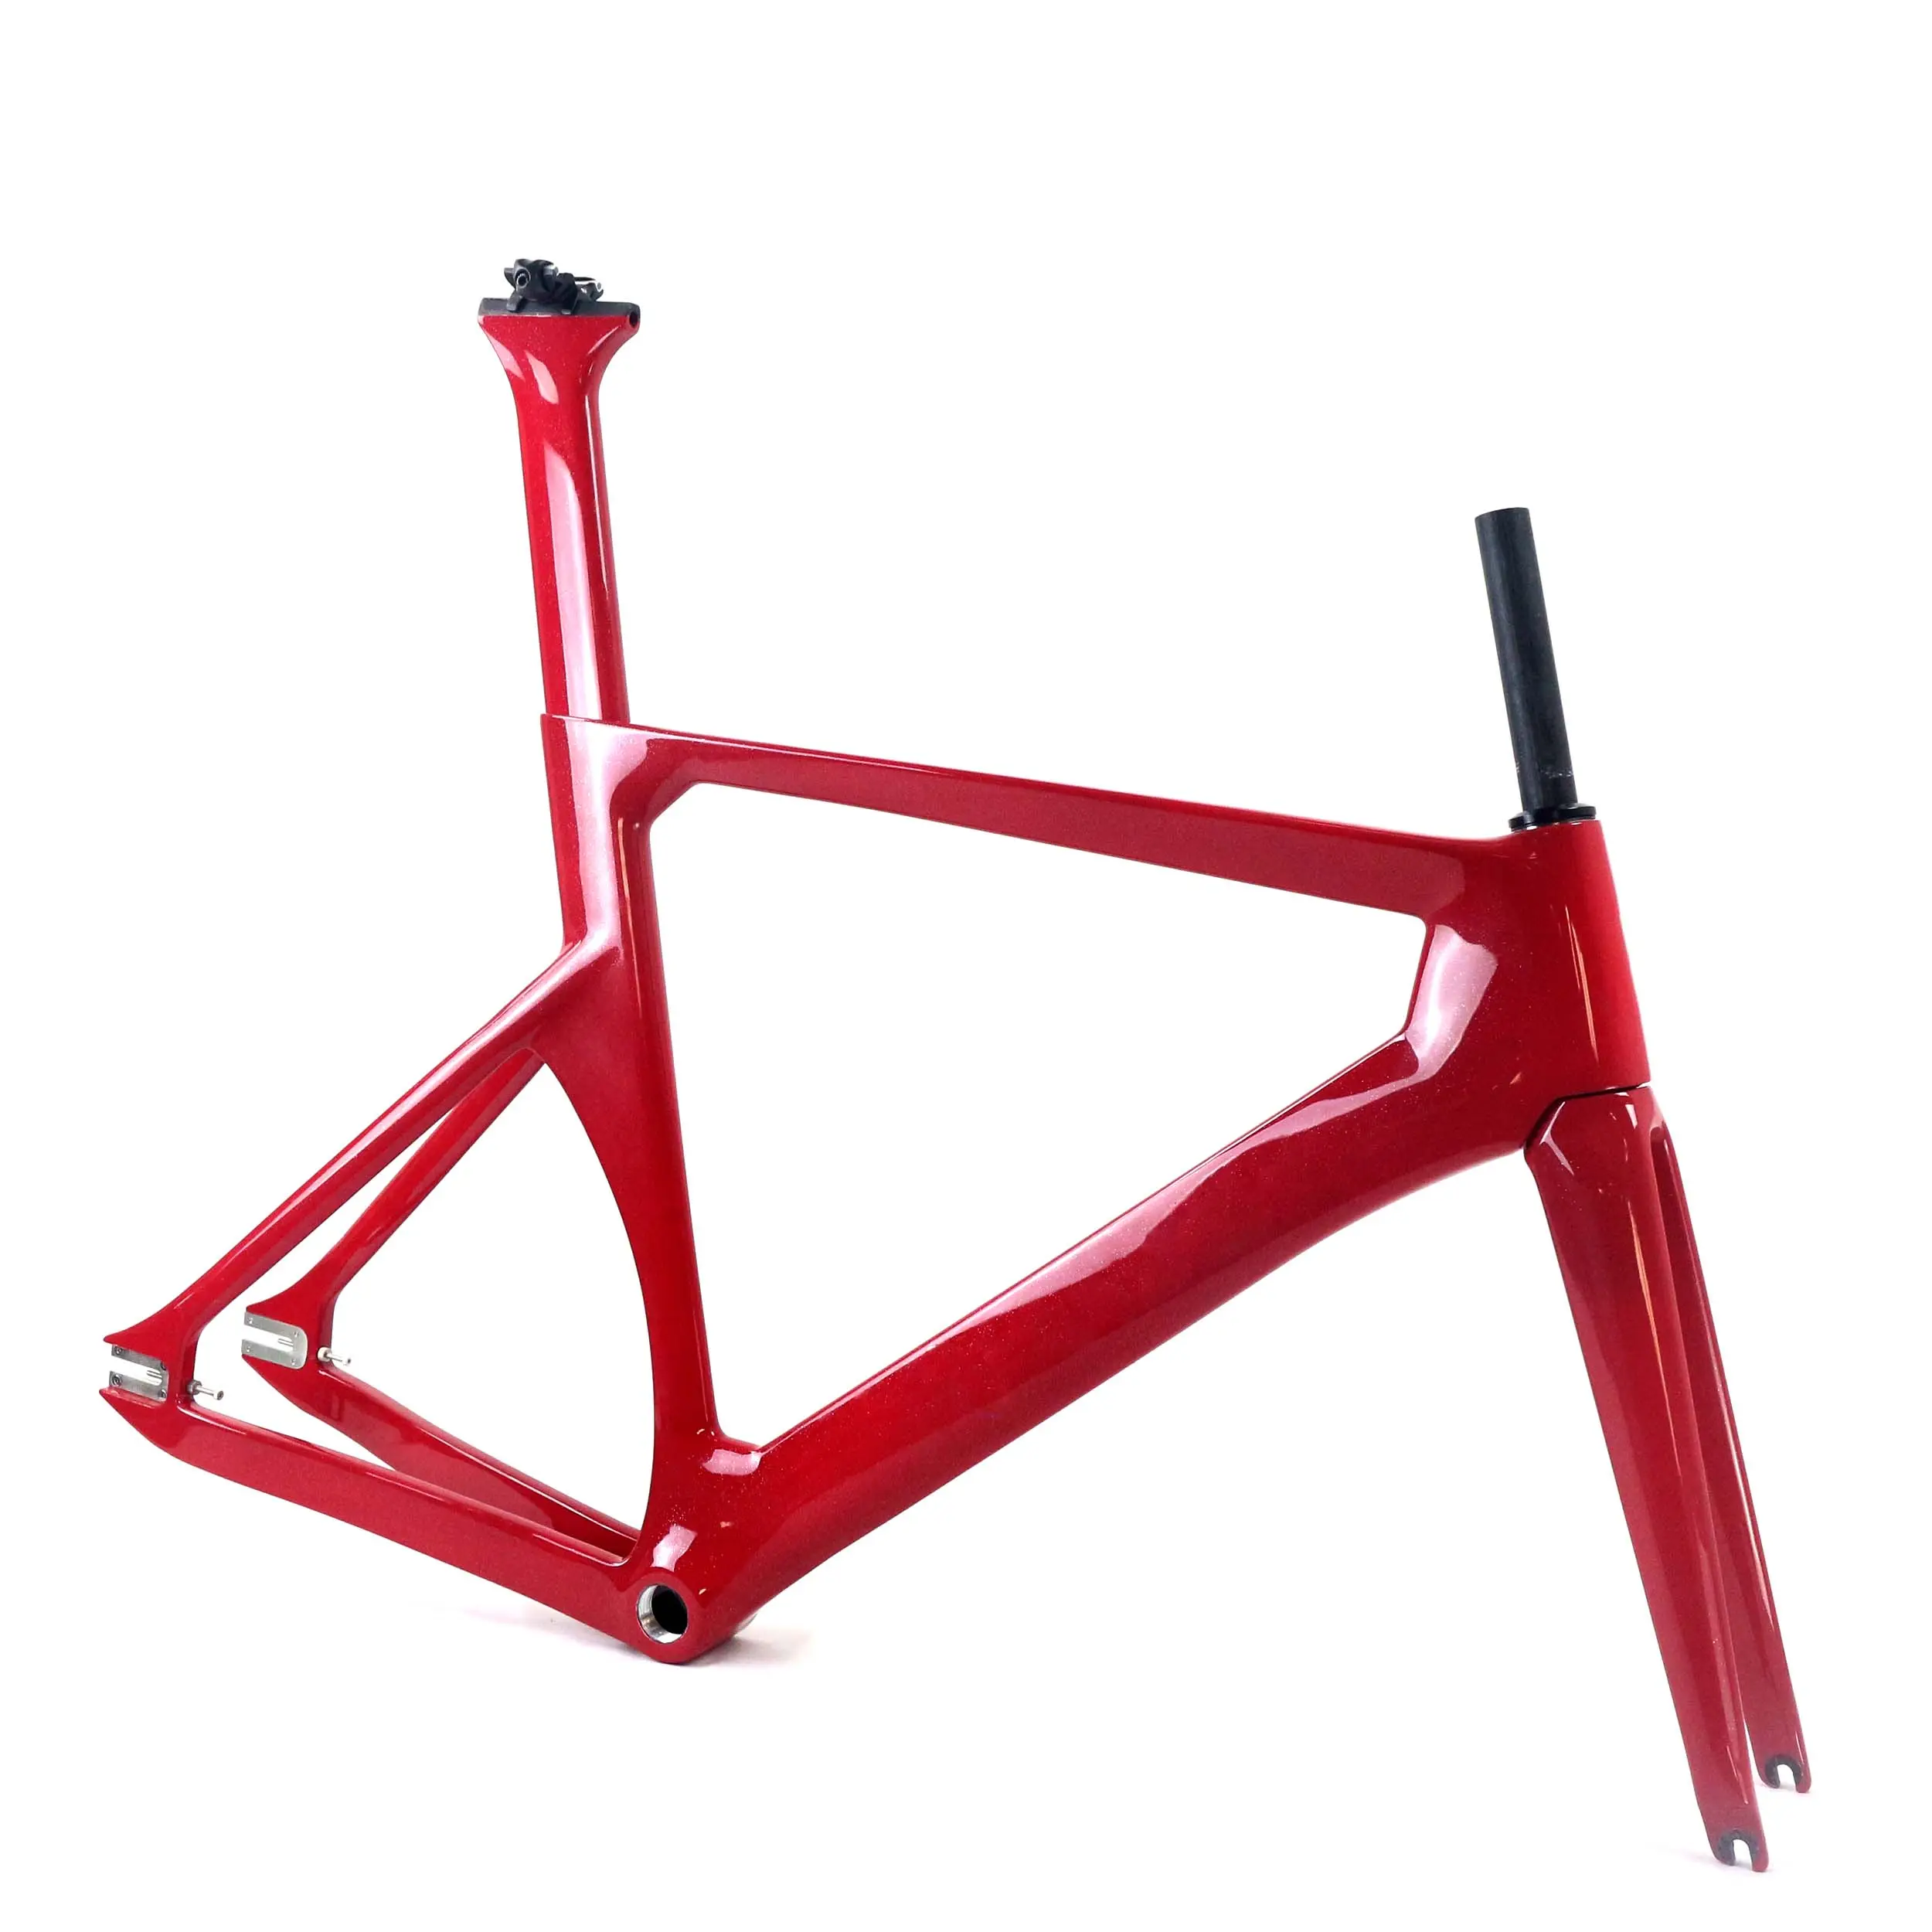 Winowsports เฟรมจักรยาน T800คาร์บอนเต็มรูปแบบเฟรม1 1/8 "ถึง1-1/2" โครงคาร์บอน BSA68